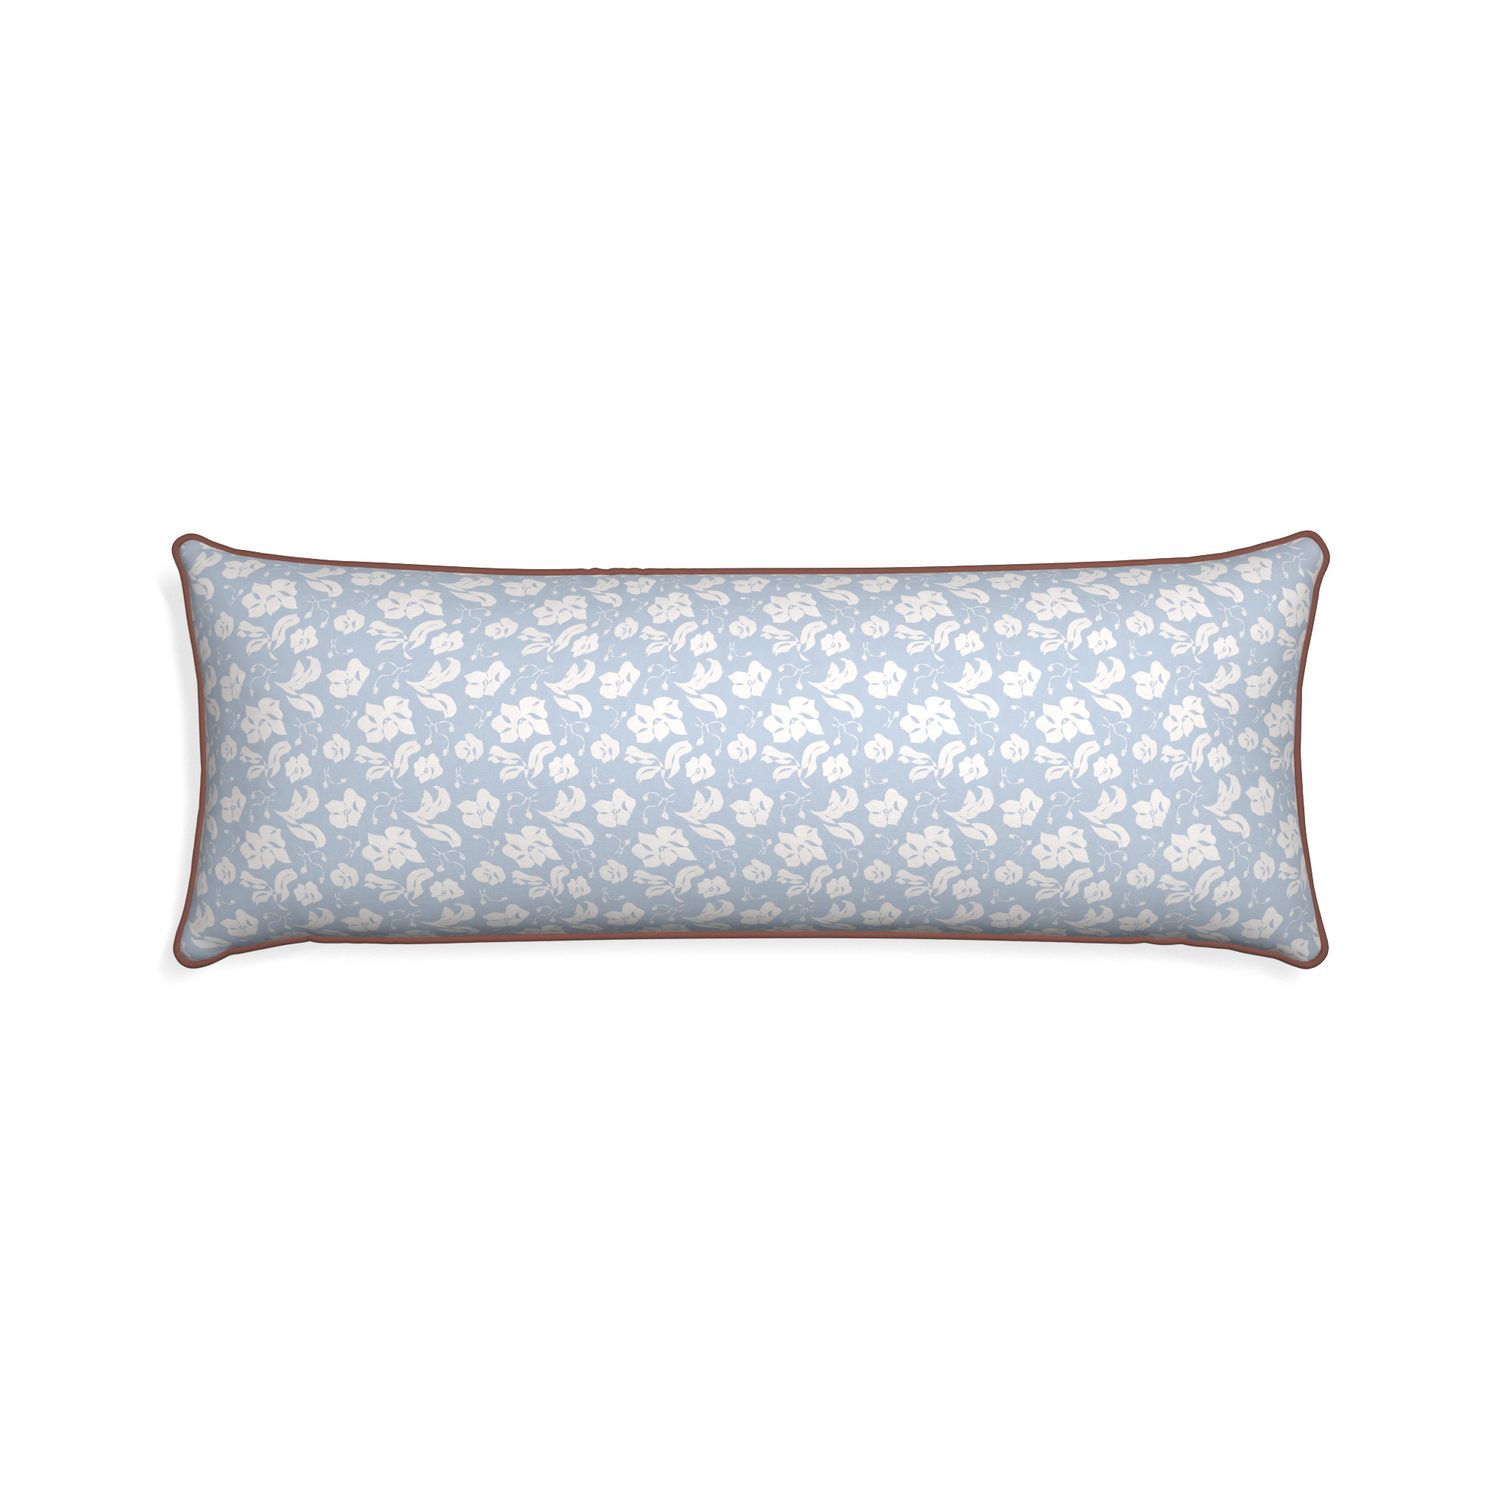 Xl-lumbar georgia custom pillow with w piping on white background